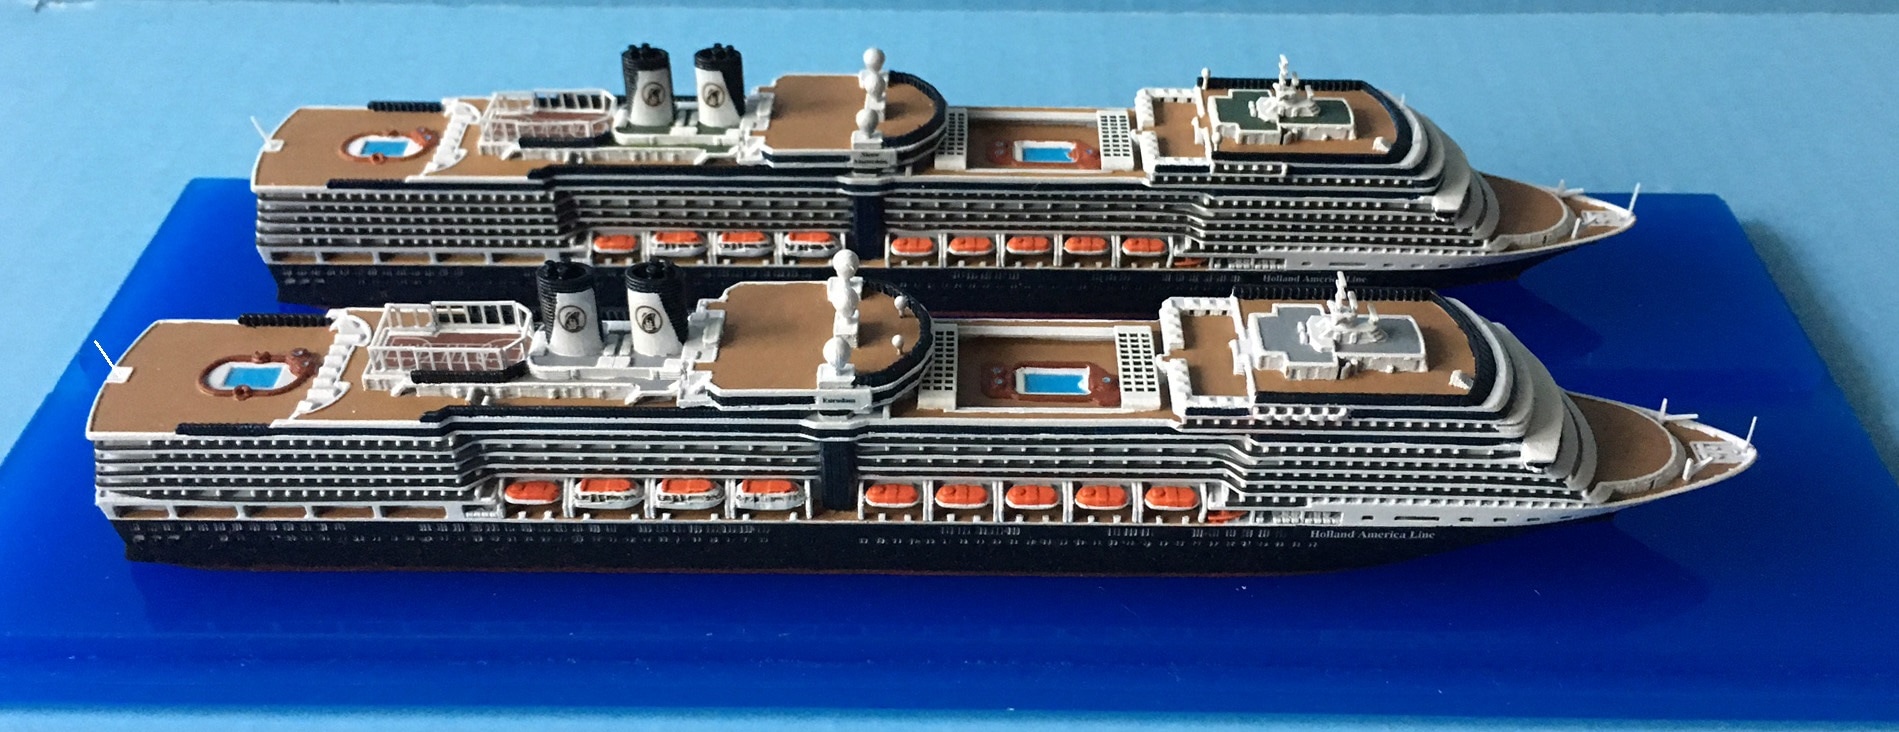 Eurodam and Nieuw Amsterdam cruise ship models in scale 1:1250